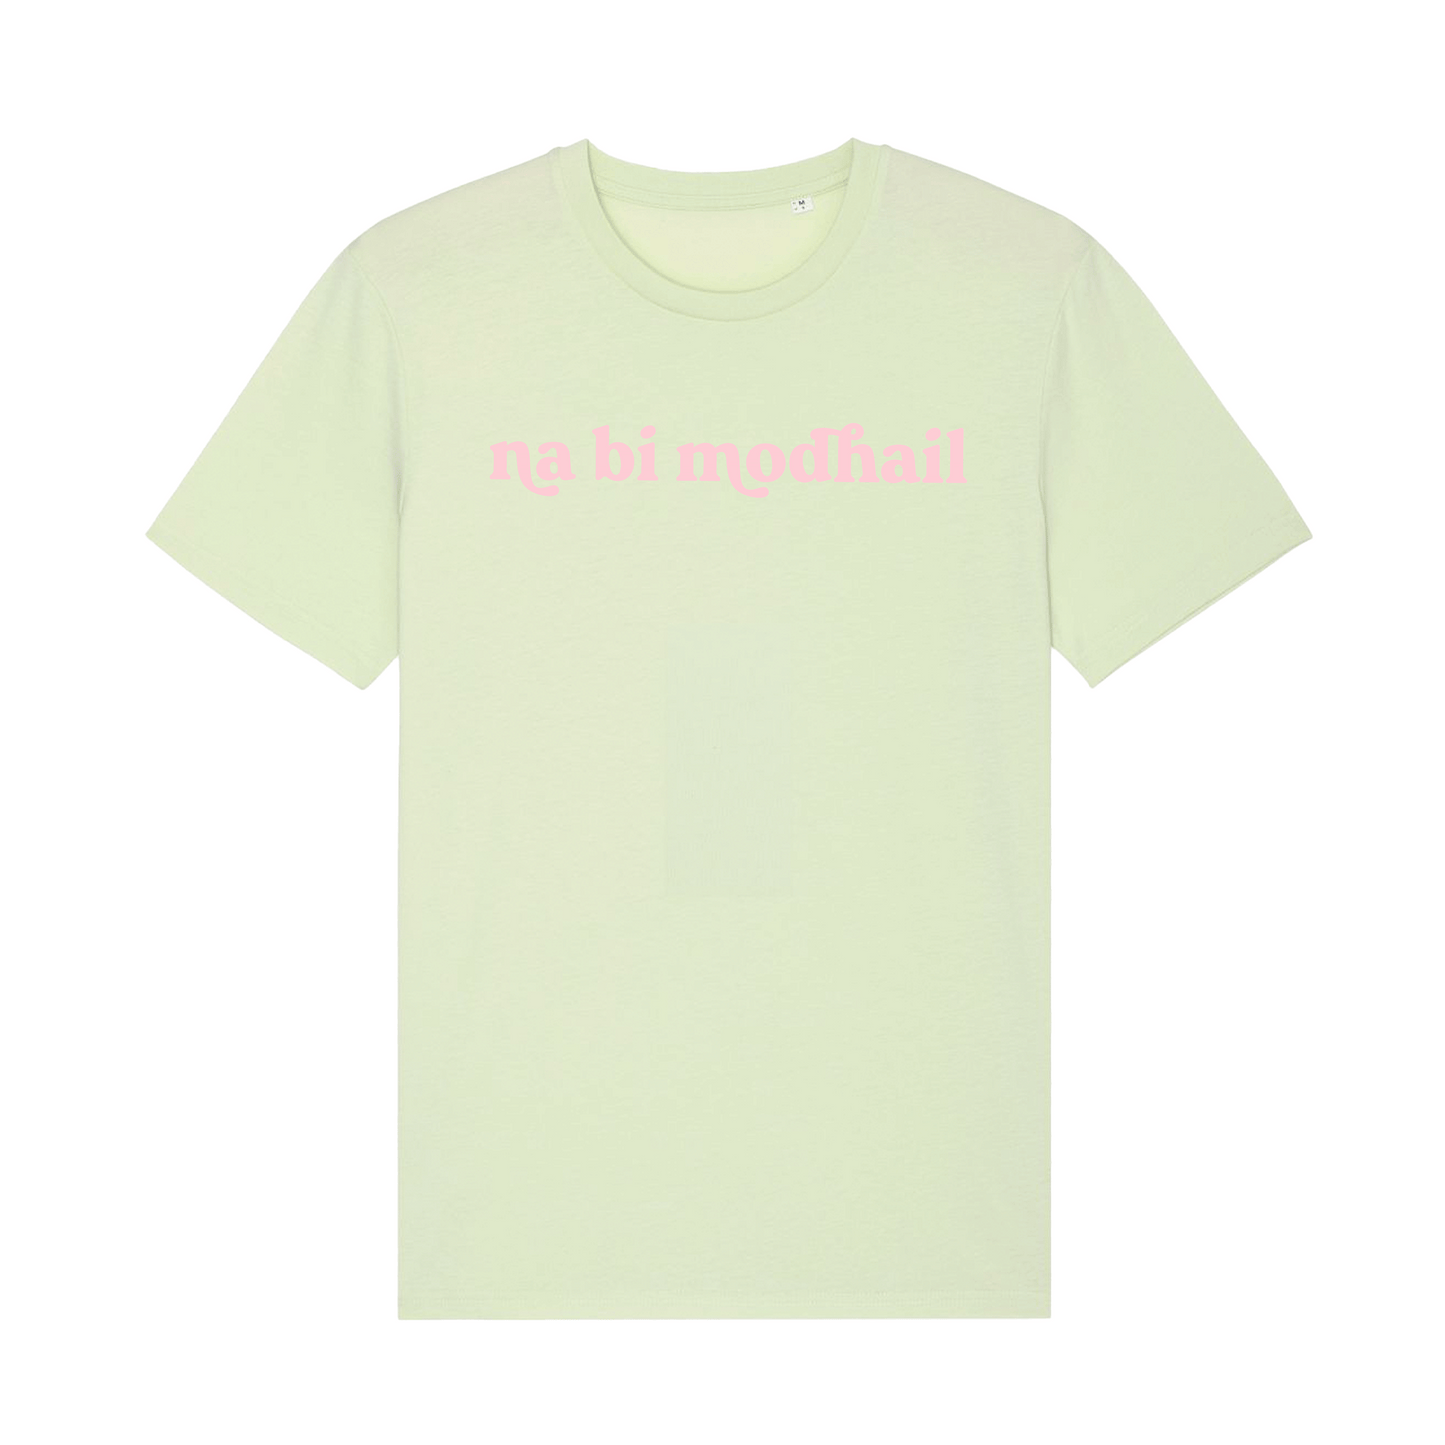 ✨bragail✨ na bi modhail embroidered t-shirt // PREORDER